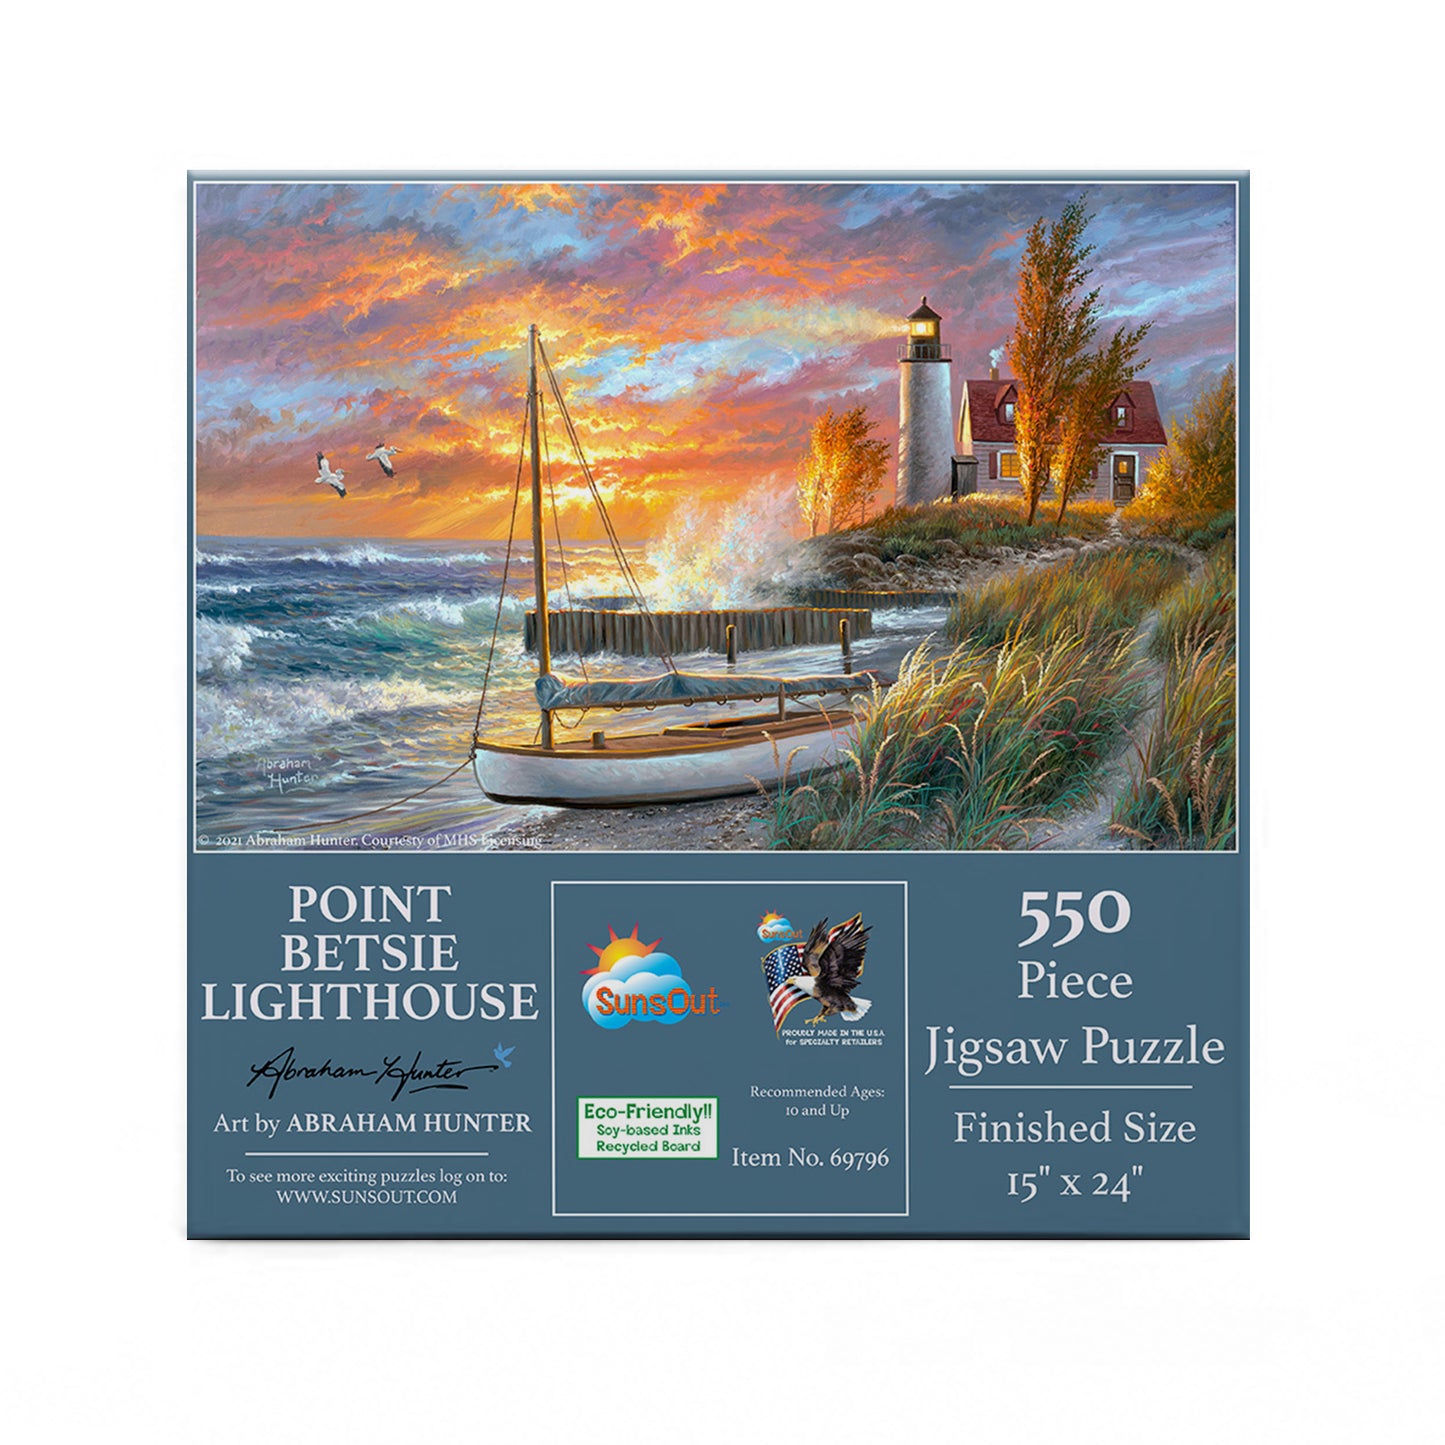 Point Betsie Lighthouse - 550 Piece Jigsaw Puzzle